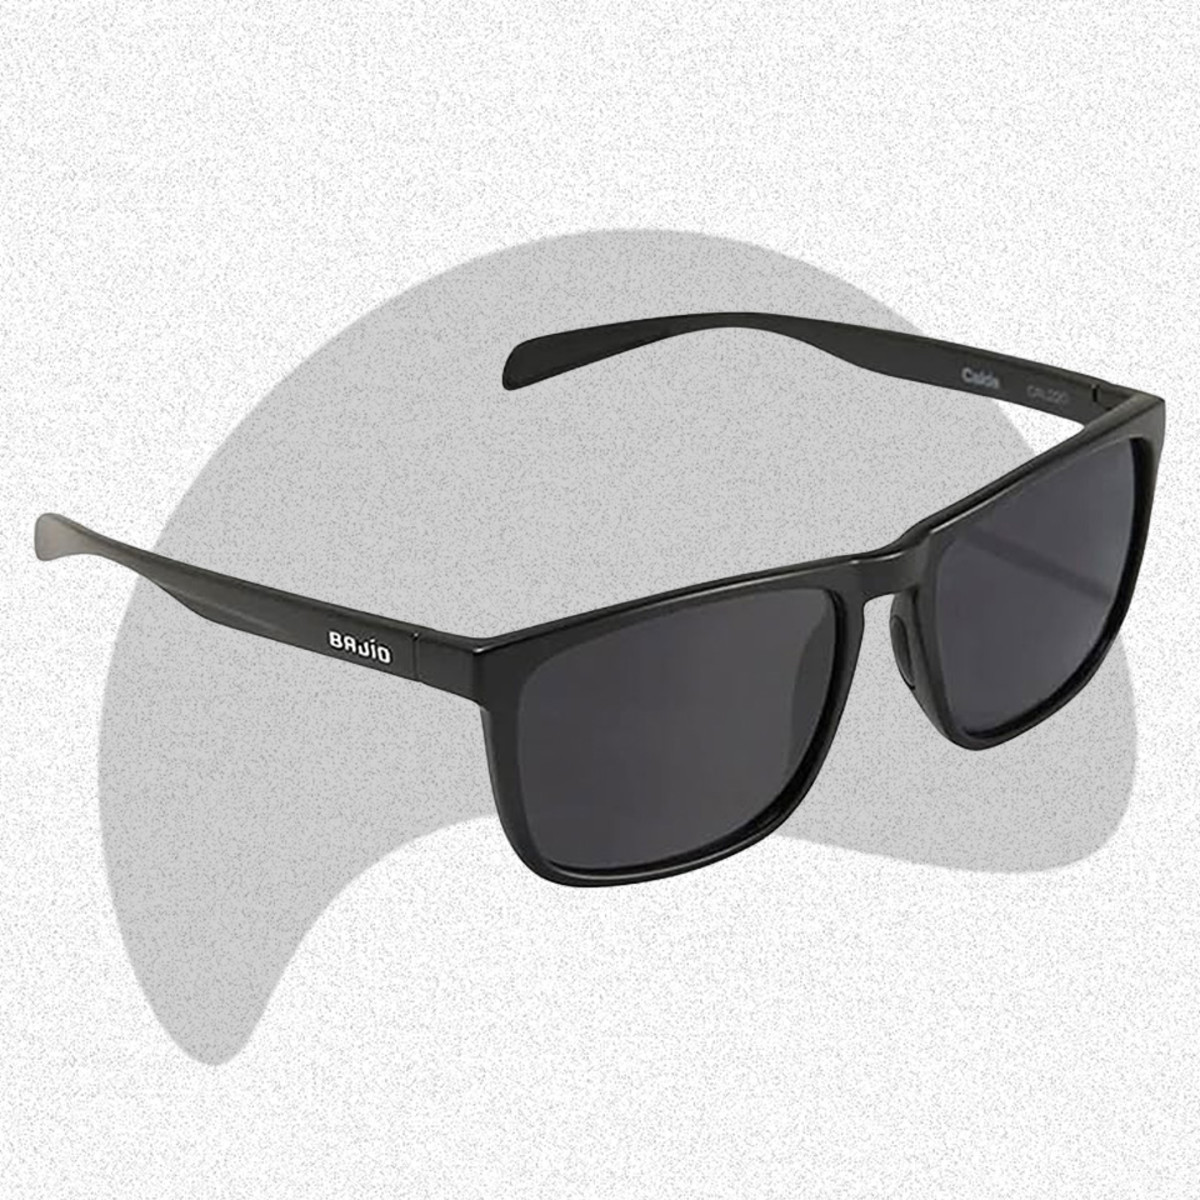 Details more than 162 rei sunglasses mens latest